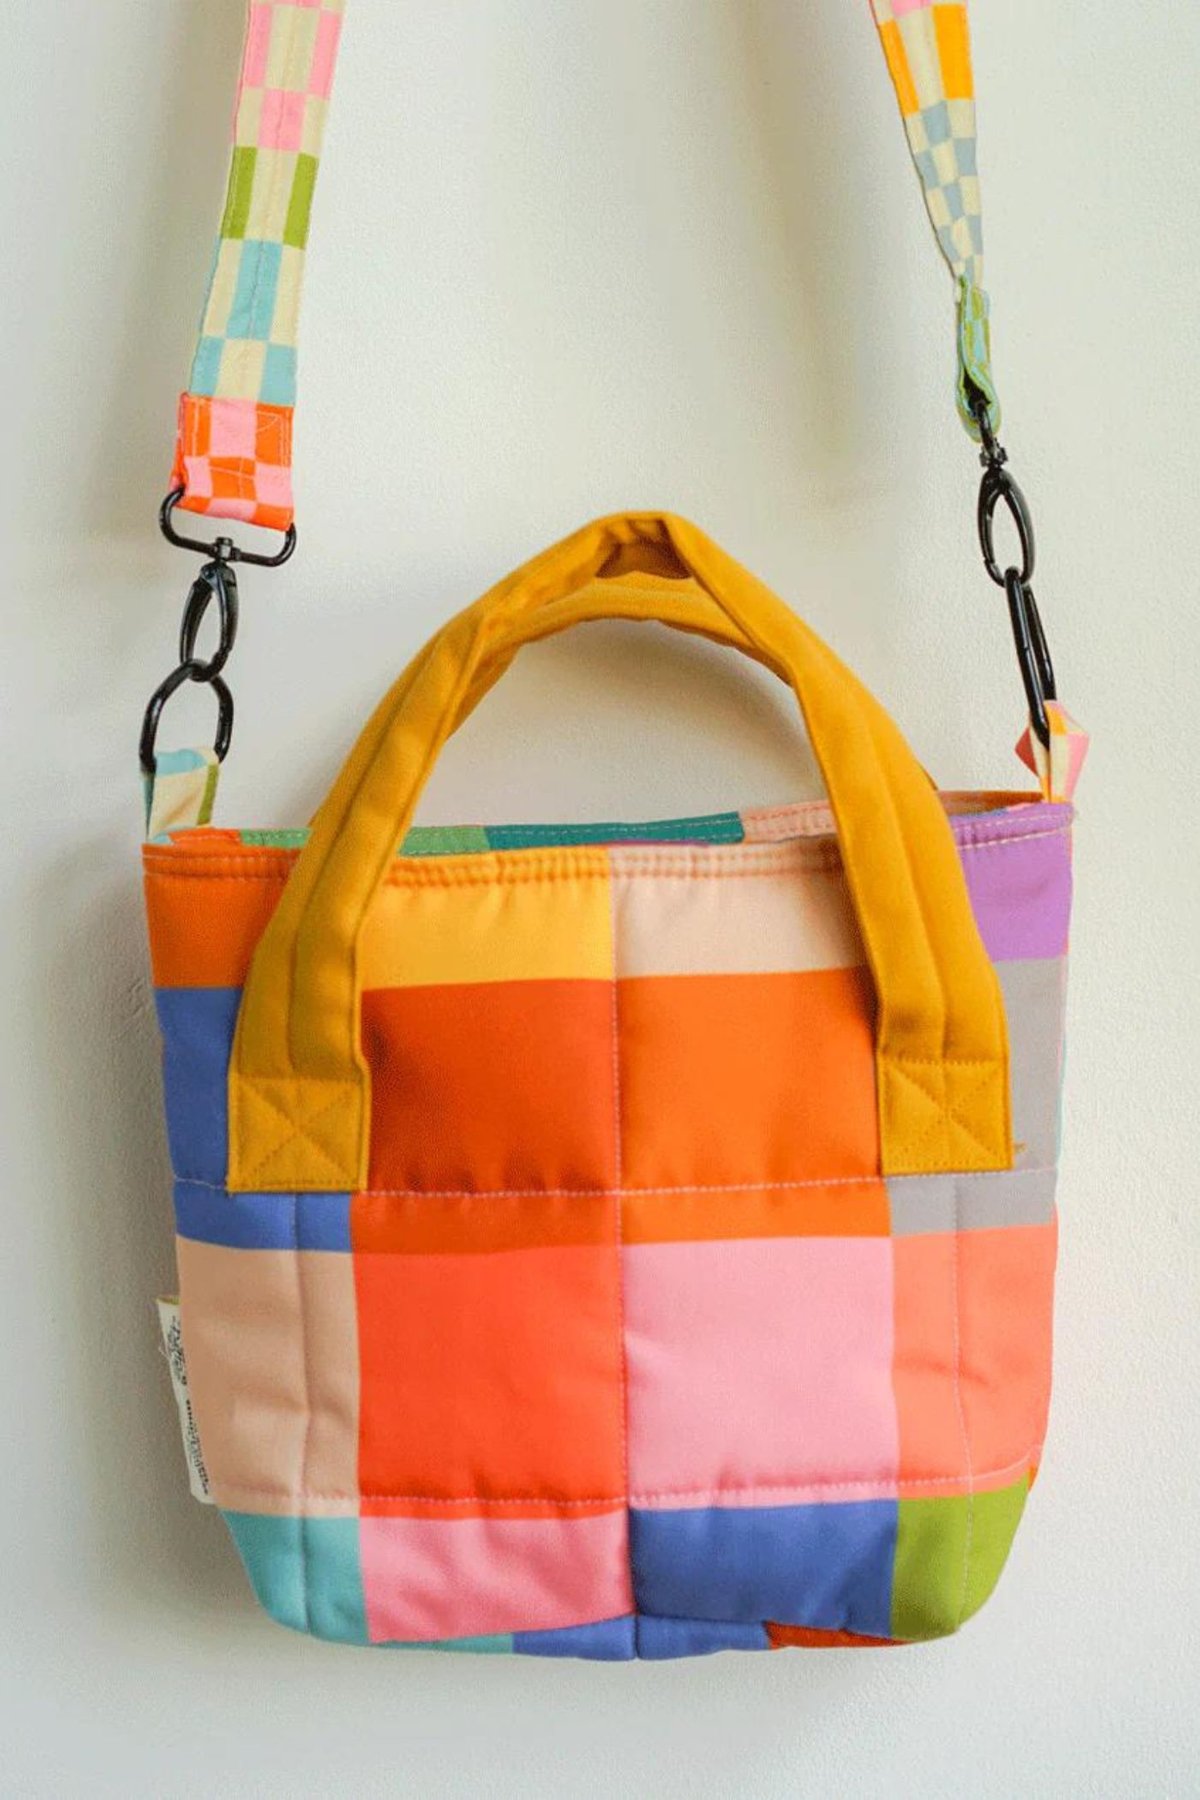 Smitten By Pattern (Mini Marshmallow Bag - Color Block)